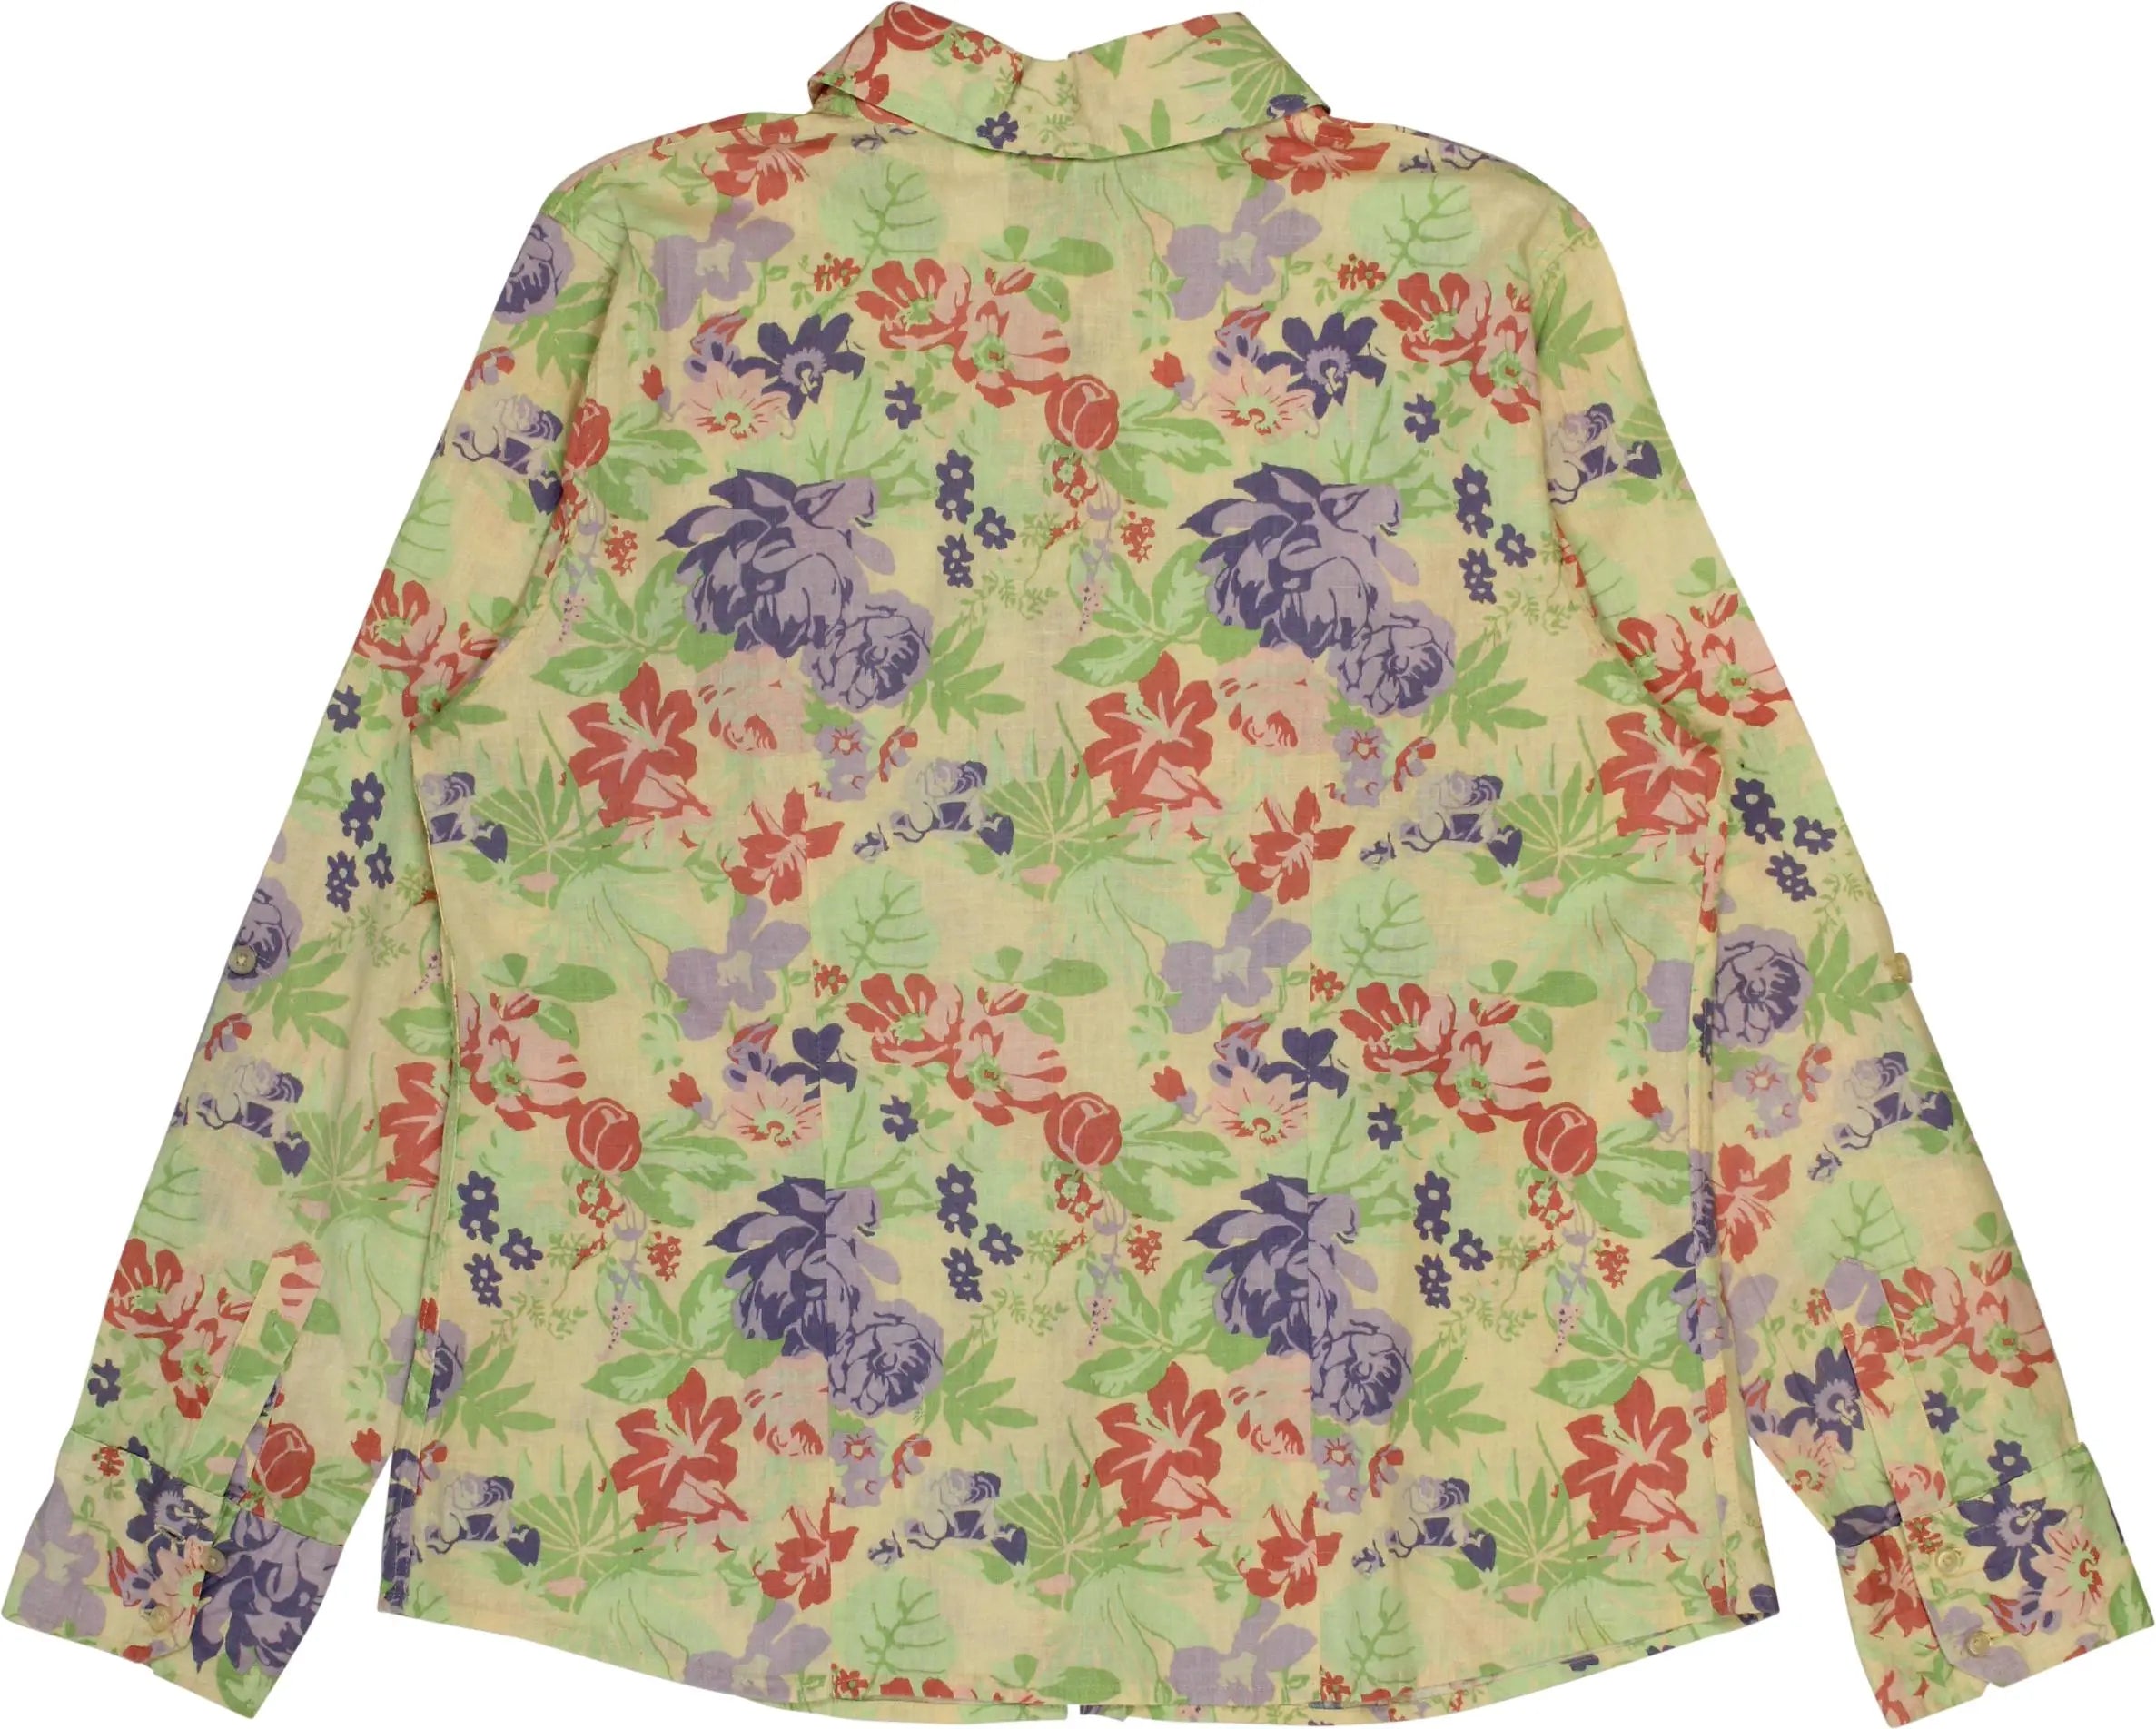 Fieldgear - Linen Blend Floral Blouse- ThriftTale.com - Vintage and second handclothing